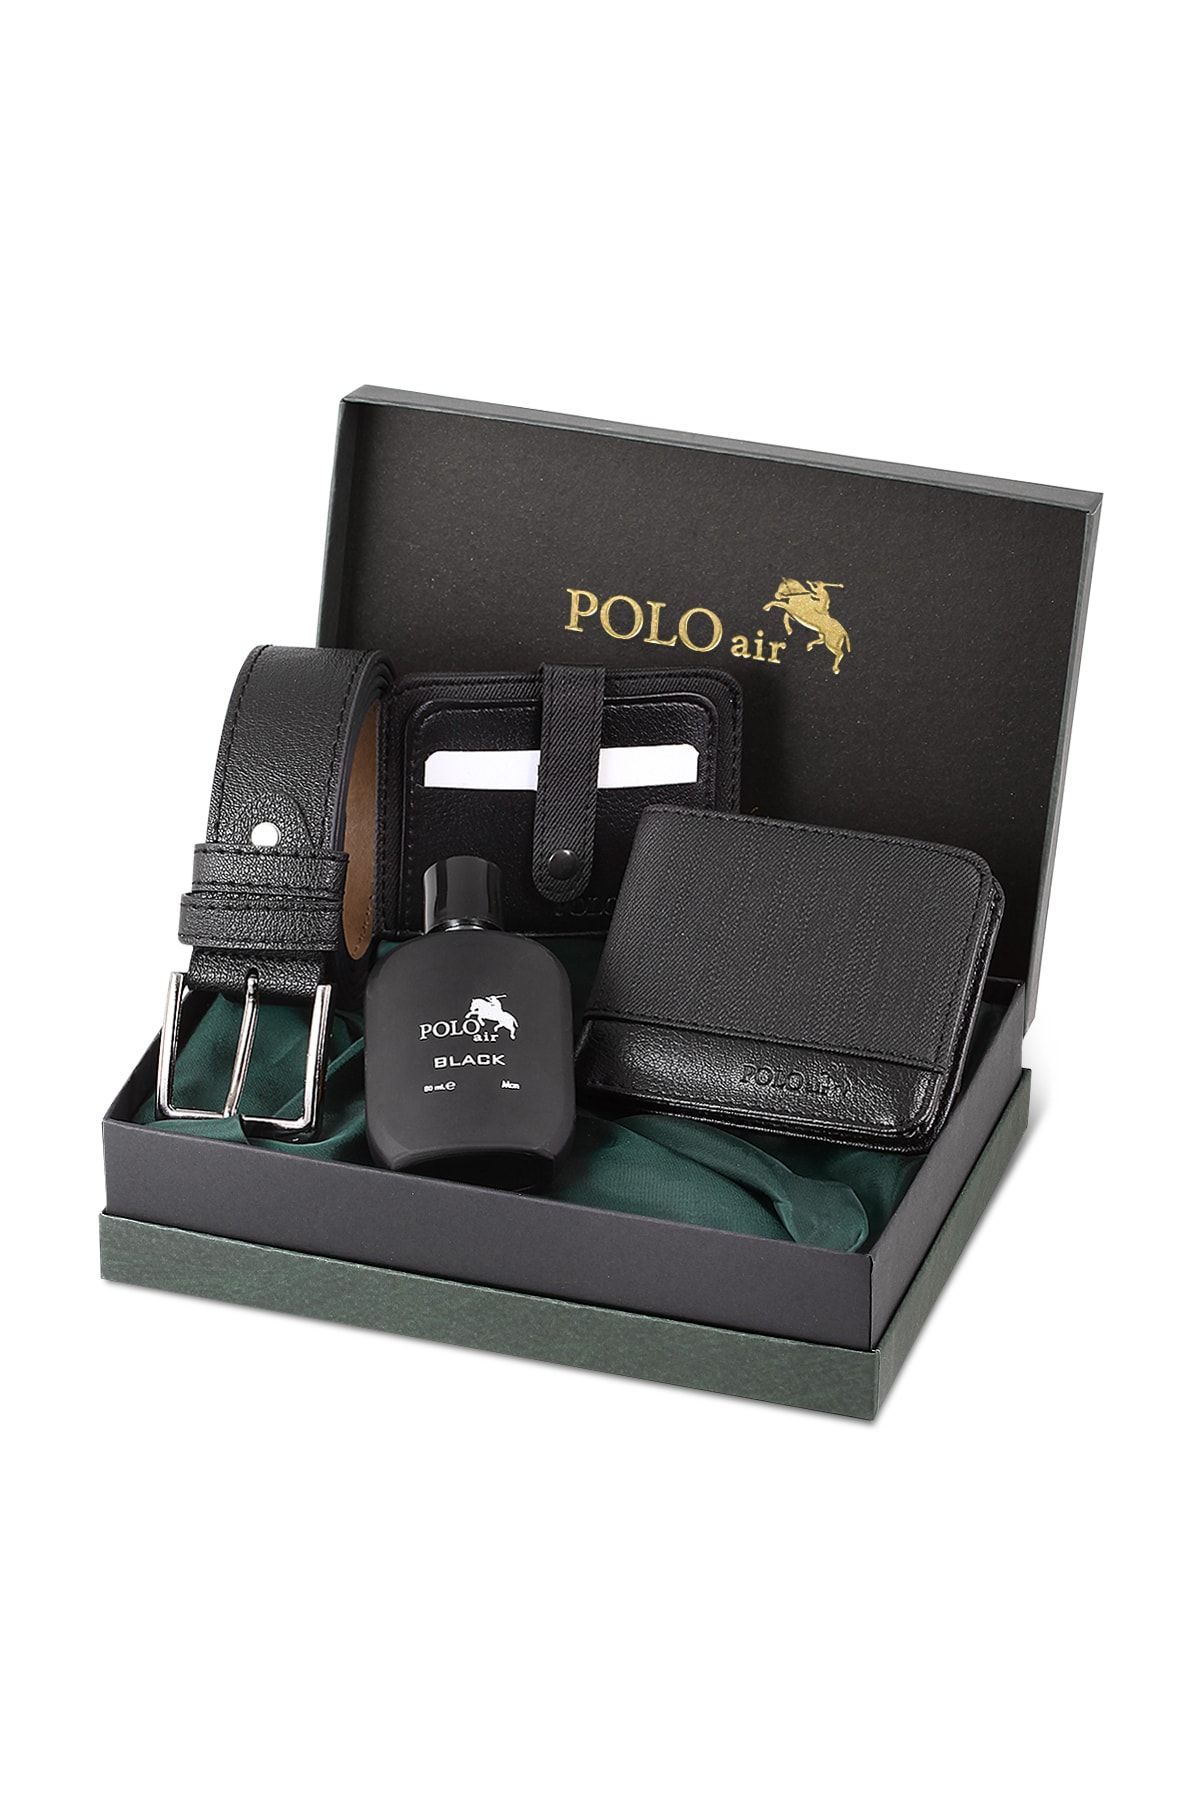 polo air Kutulu Spor Erkek Cüzdan Kemer Kartlık Parfüm Seti Siyah Renk